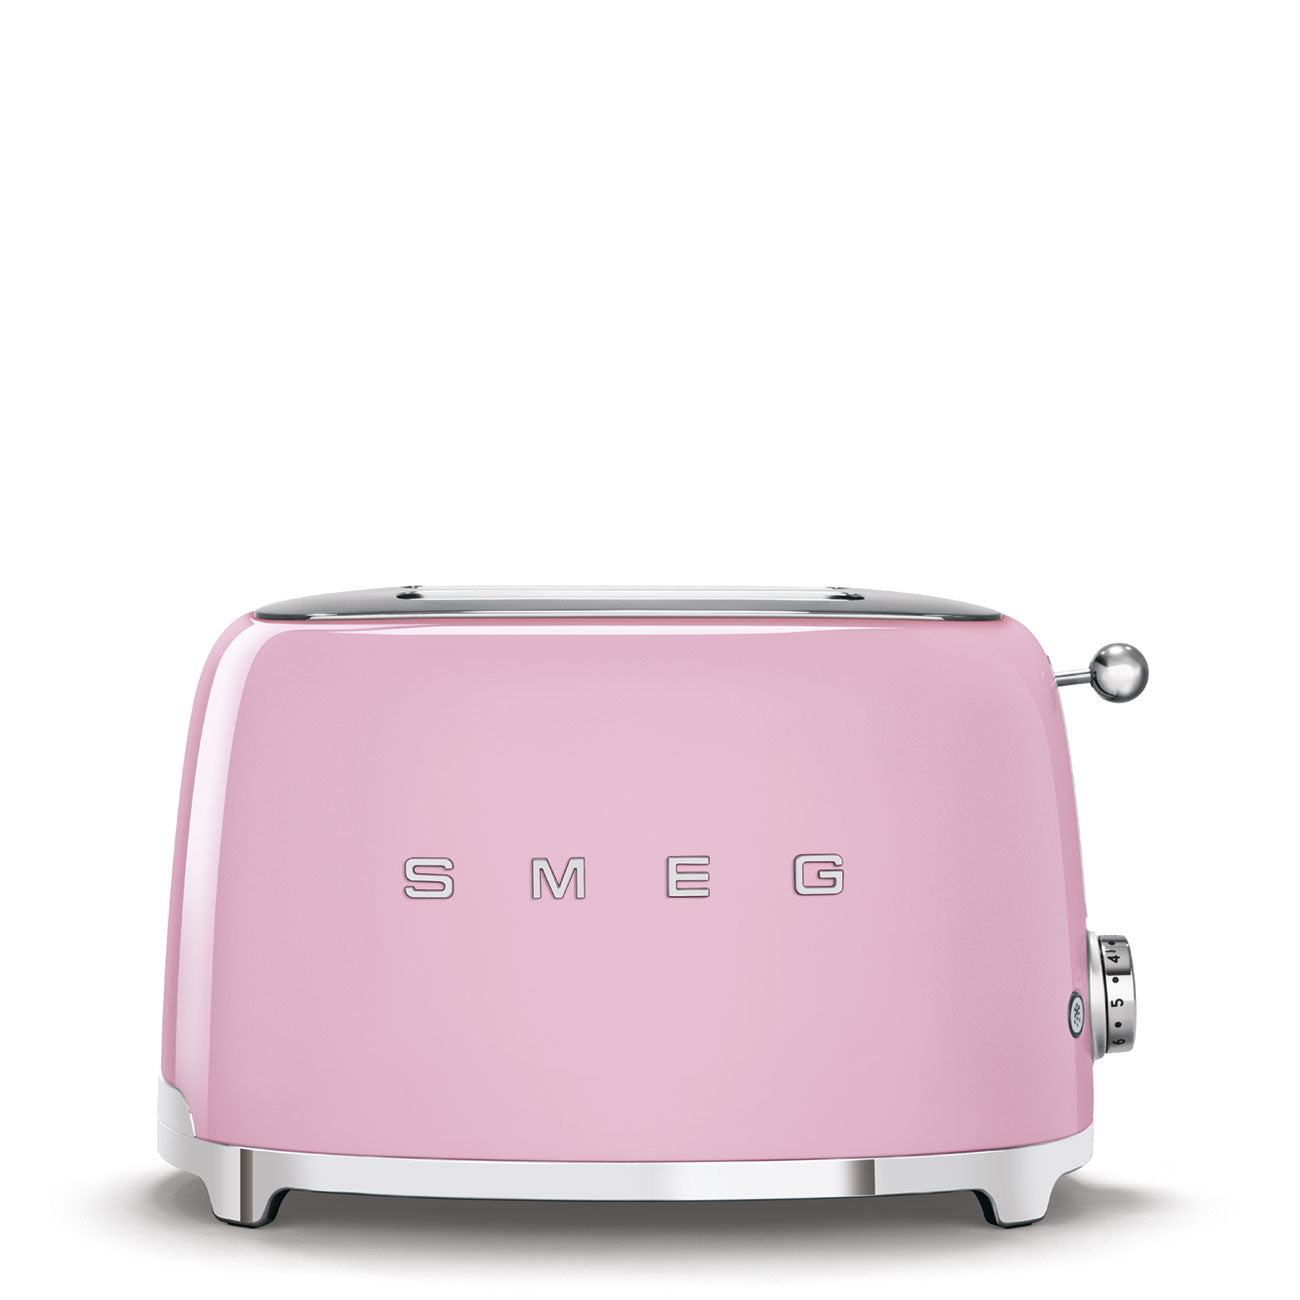 2-Slice Toaster- Pink